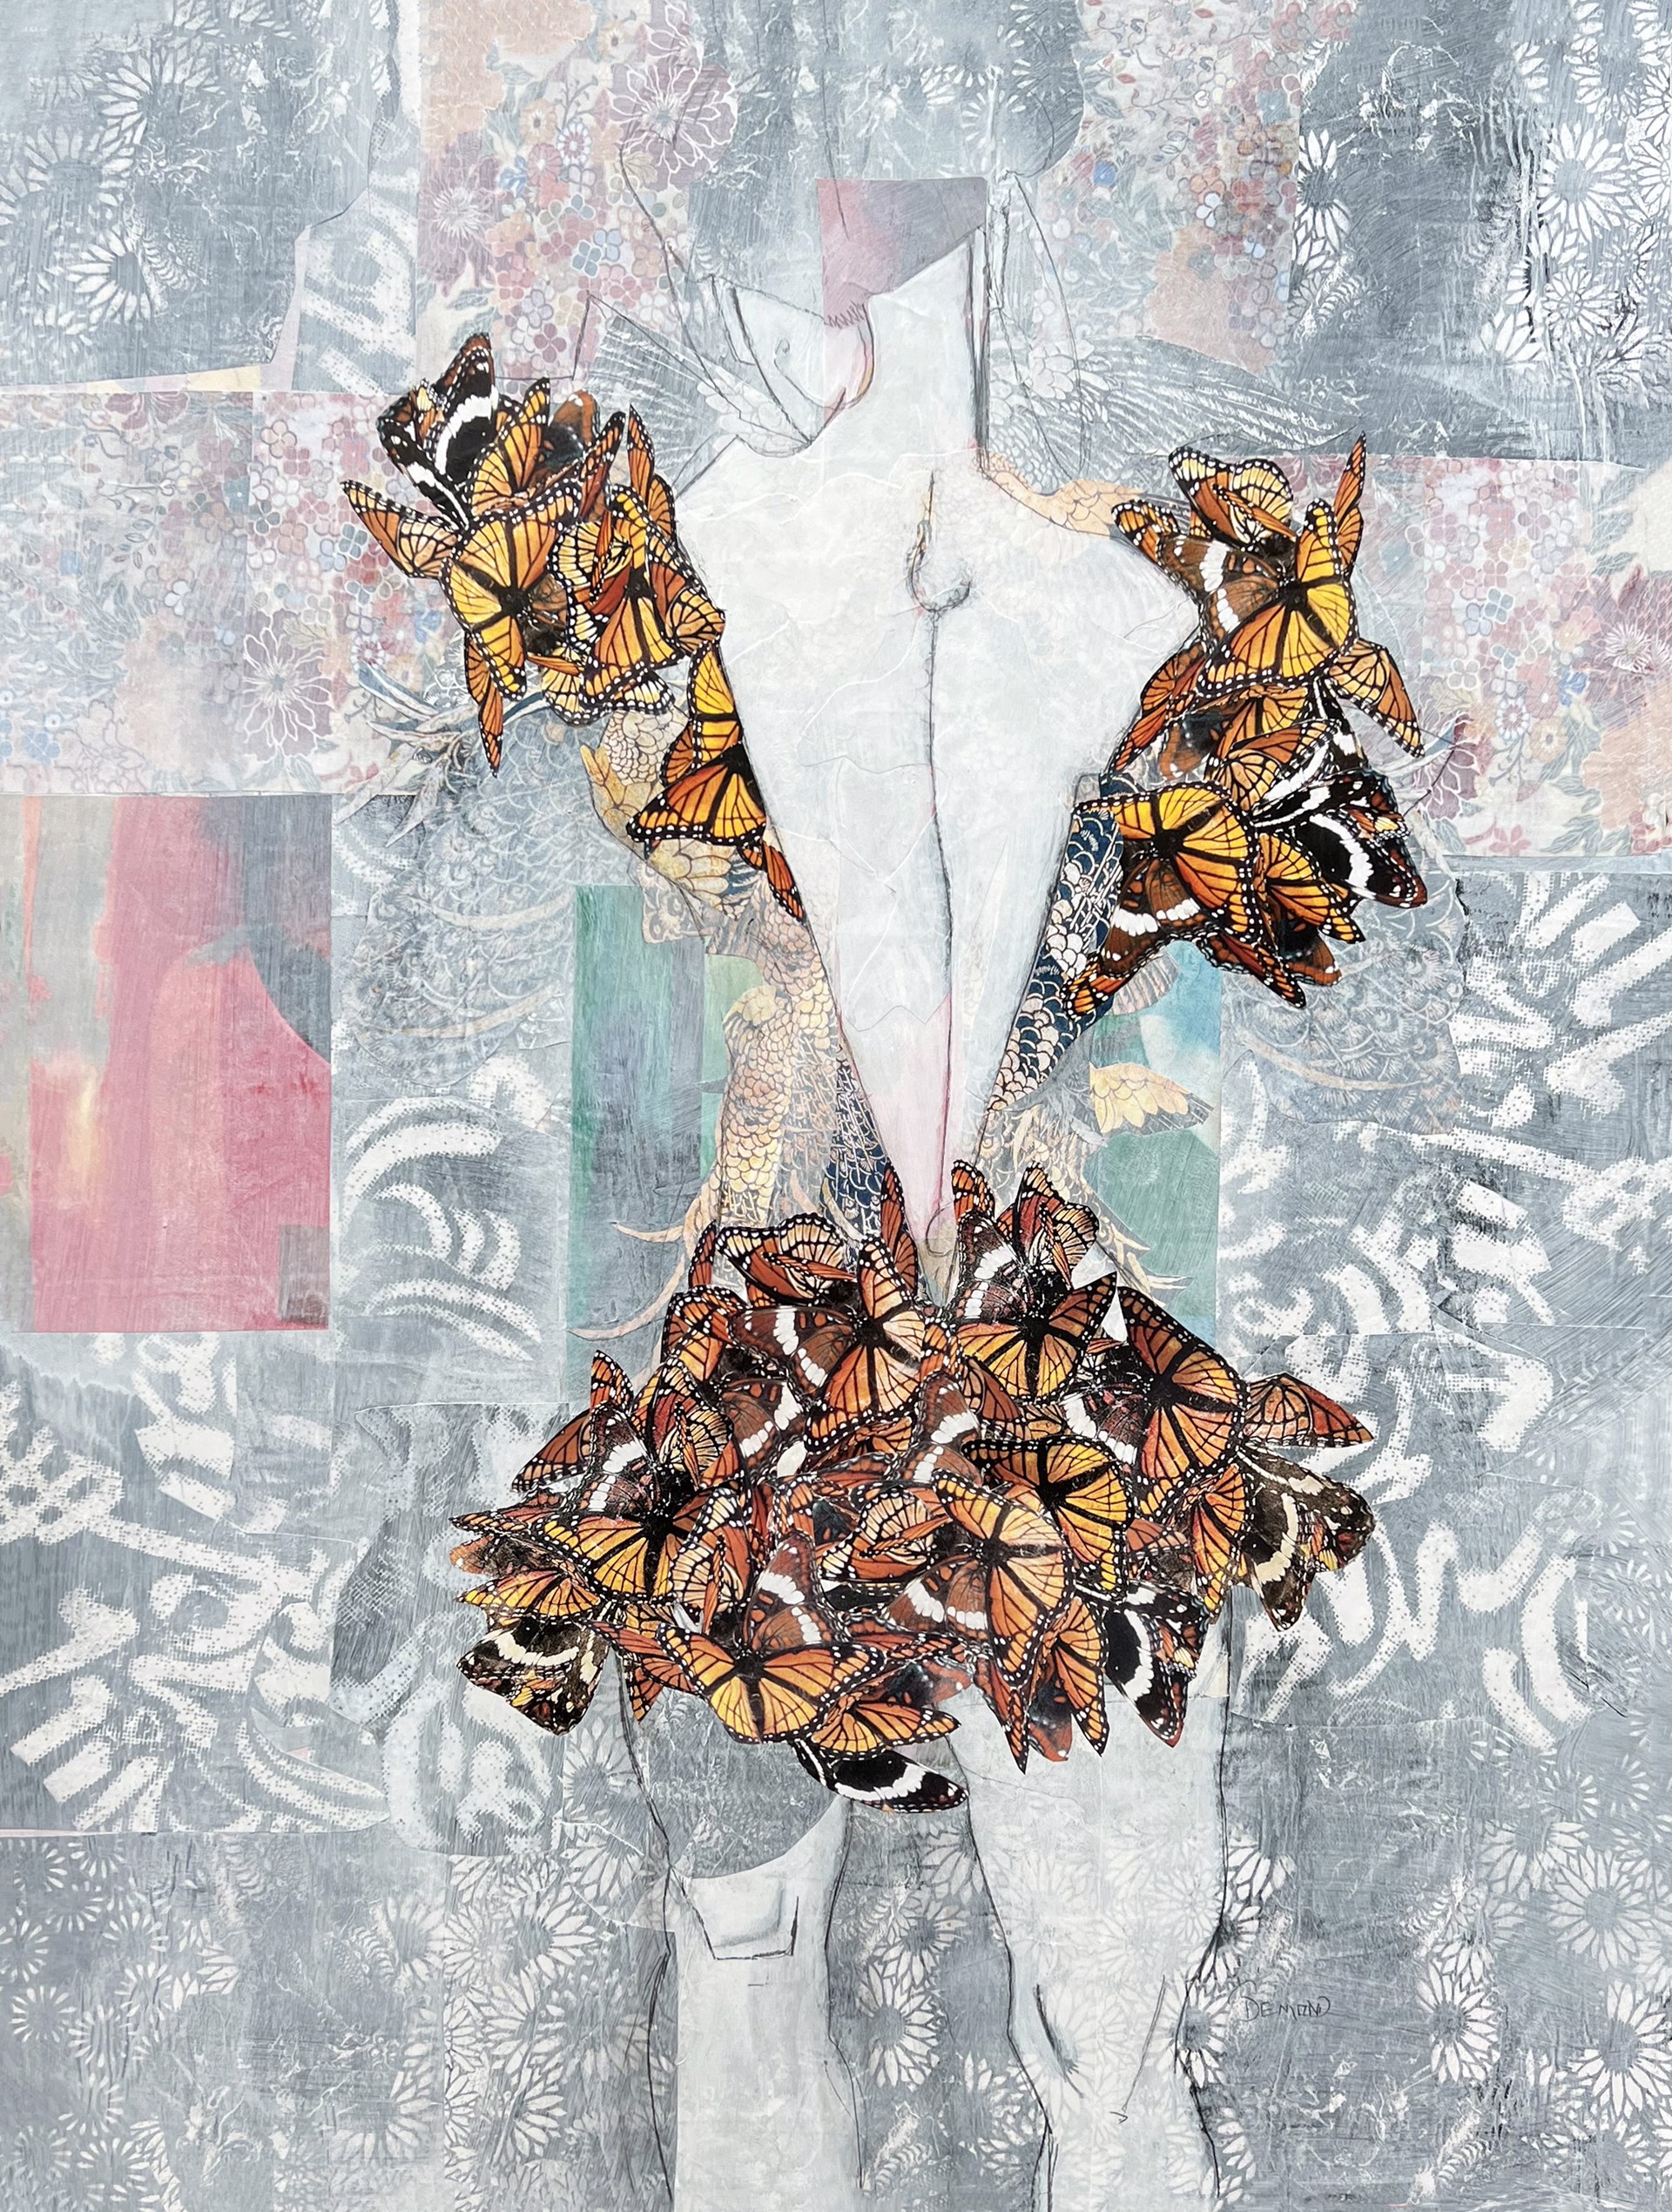 Woman Figure with Butterflies by Demond Matsuo